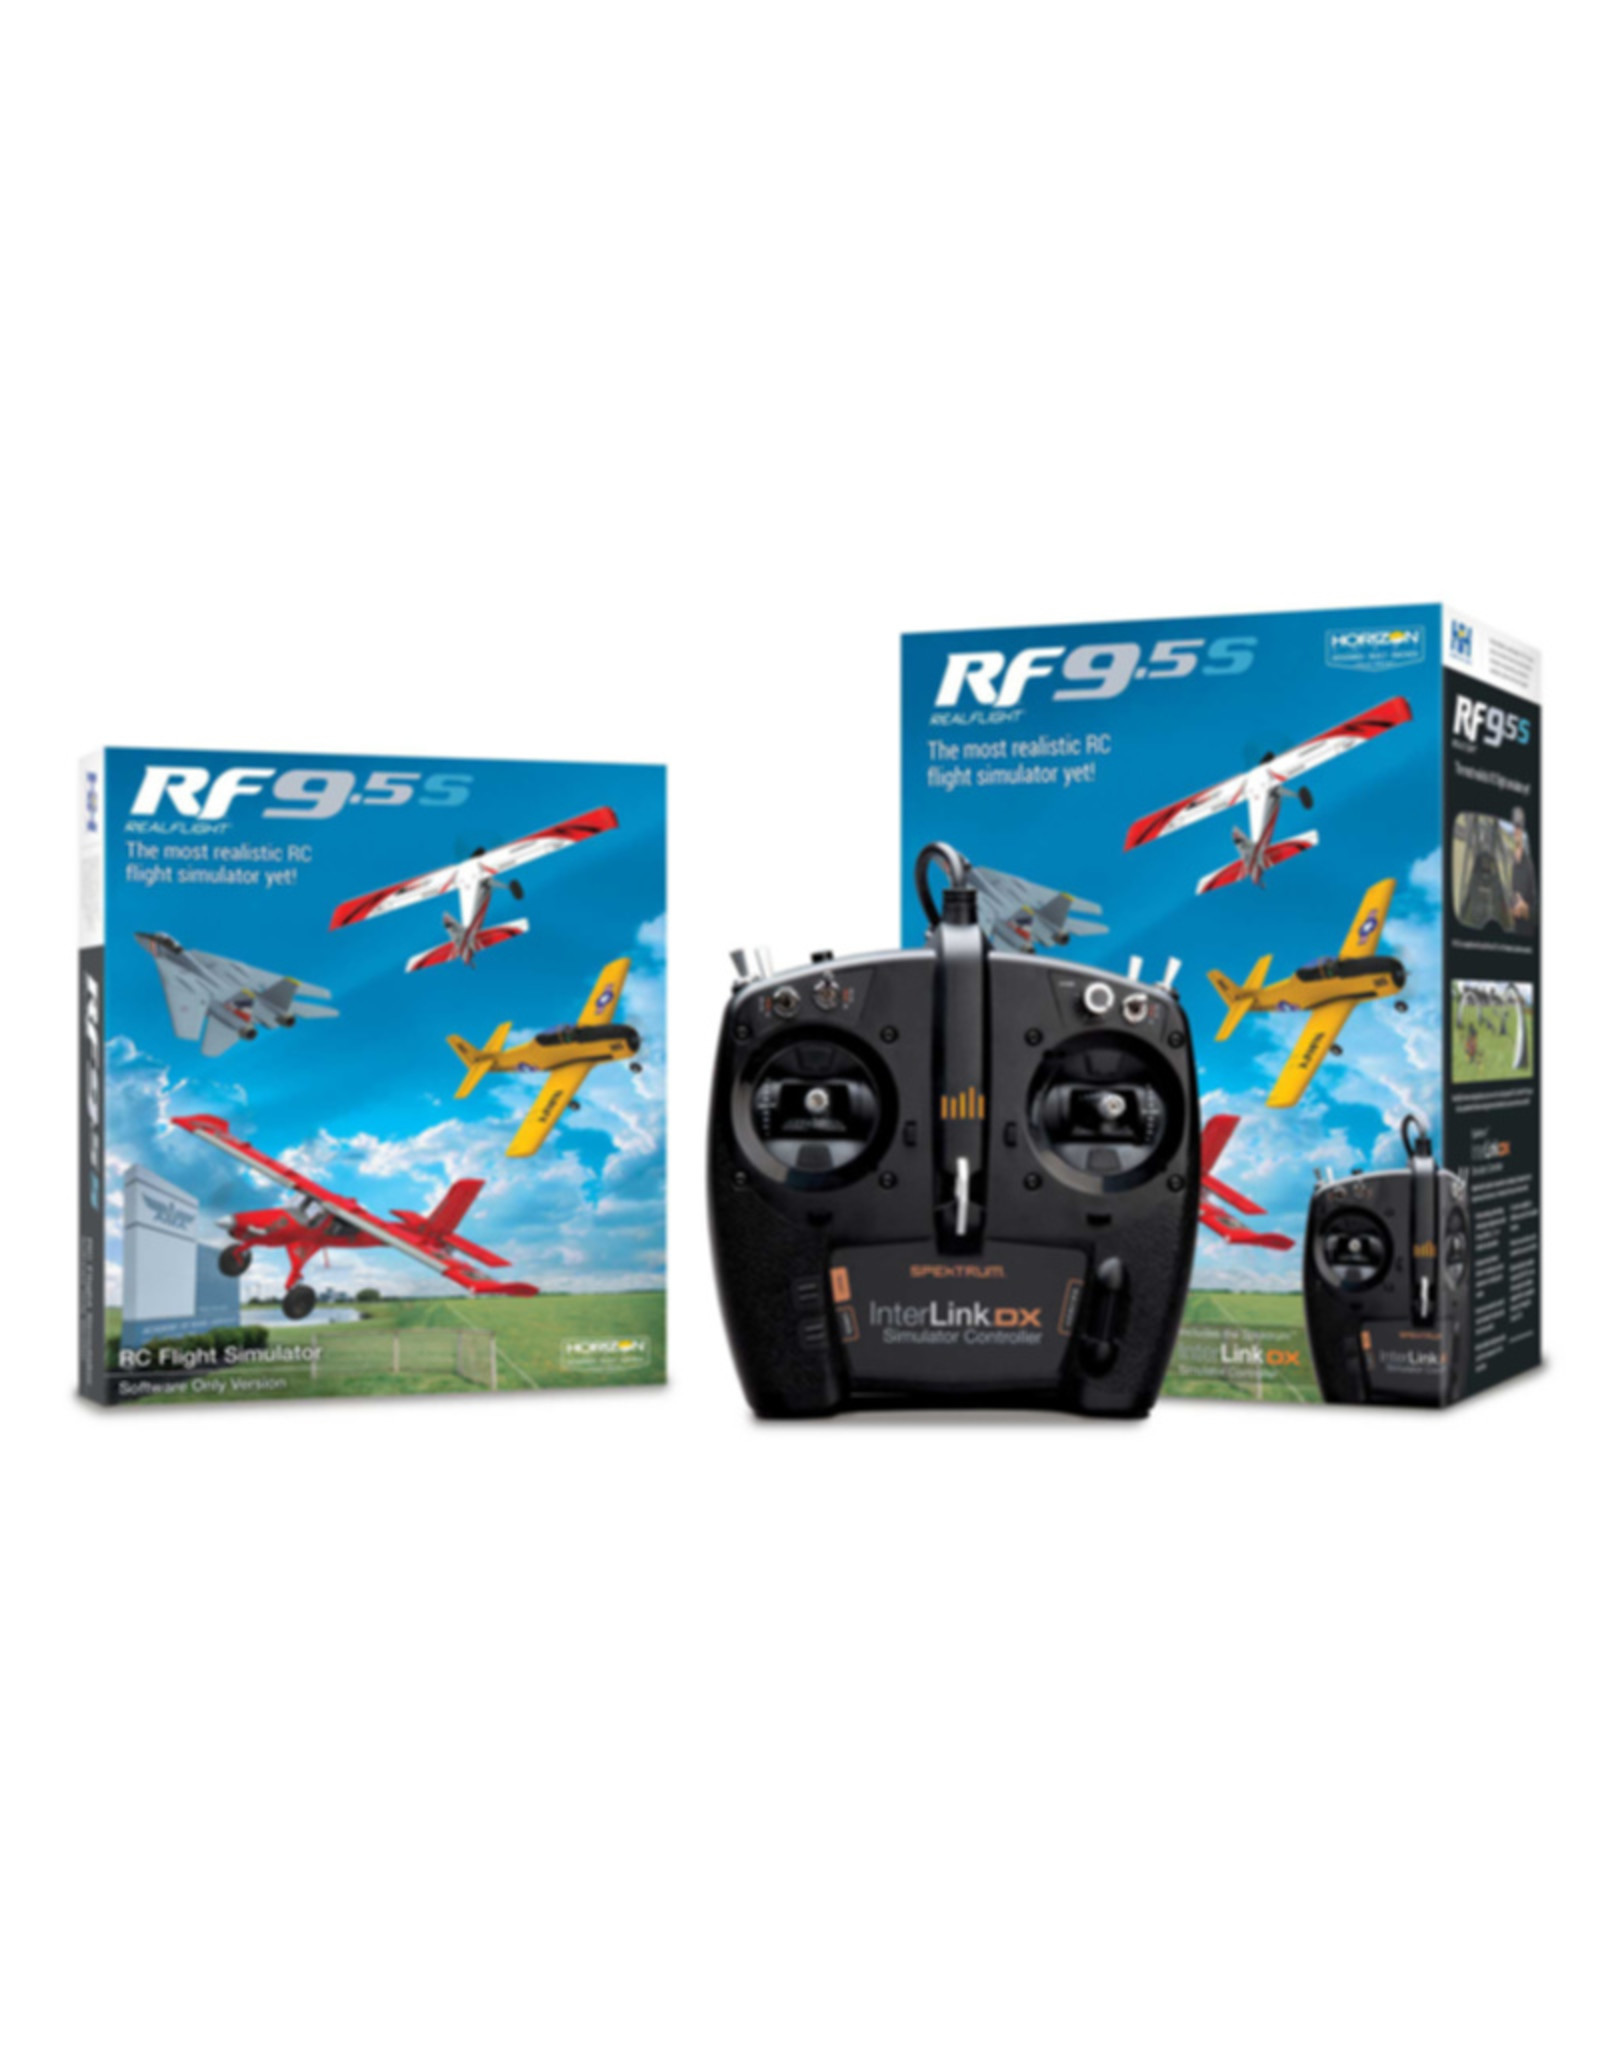 RFL1200S	RealFlight 9.5S Flight Sim W/ Interlink Controller